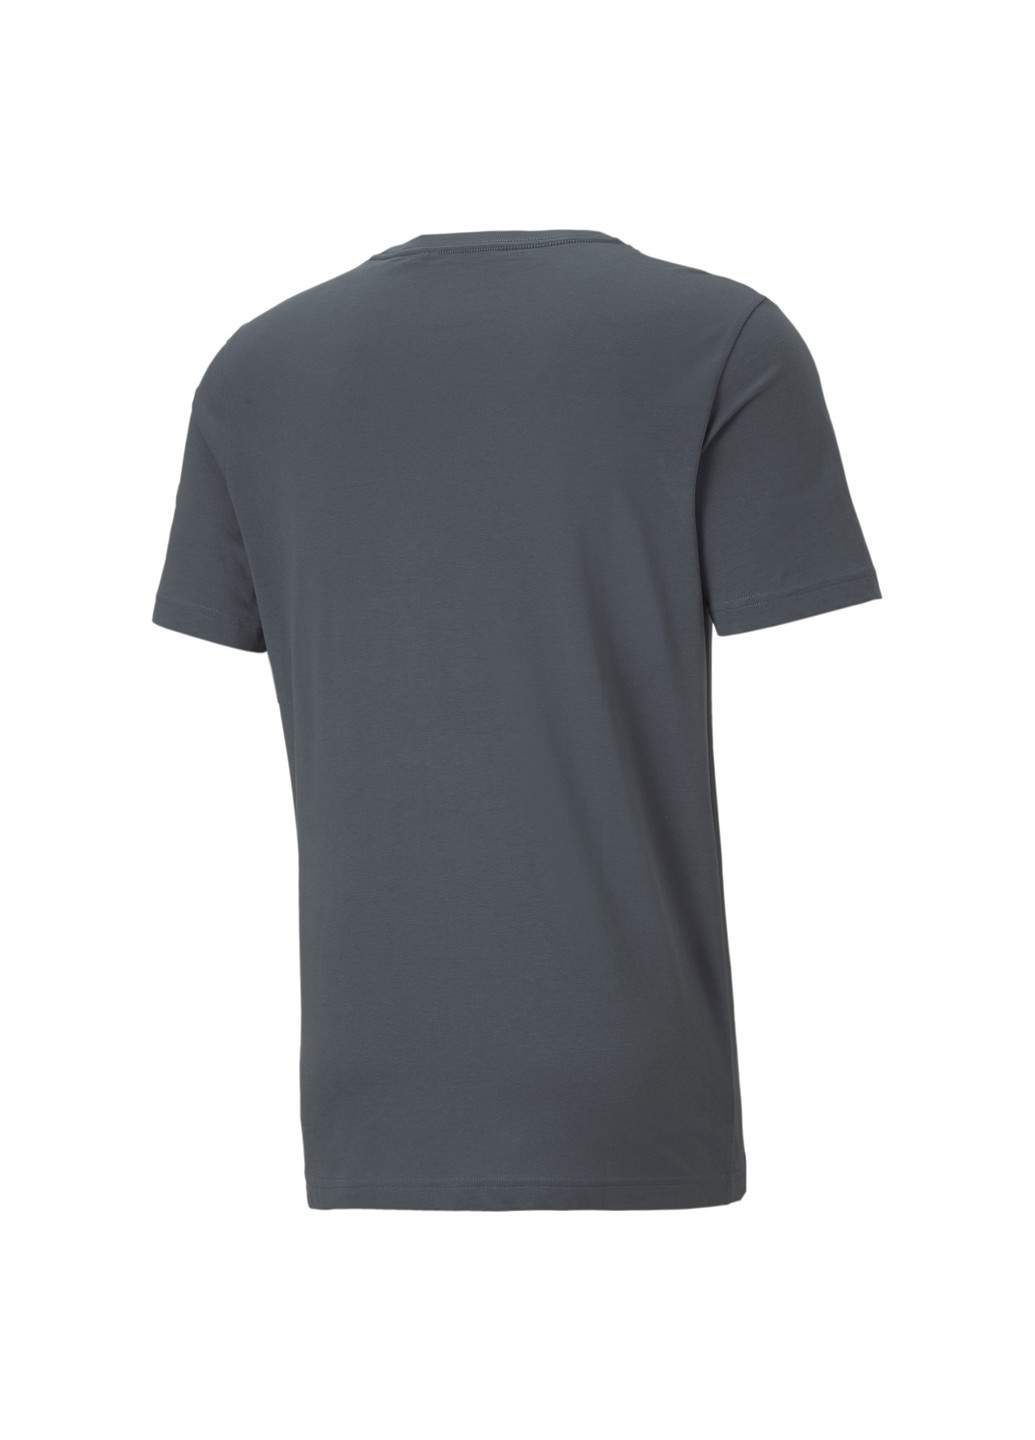 Серая футболка essentials+ 2 colour logo men's tee Puma